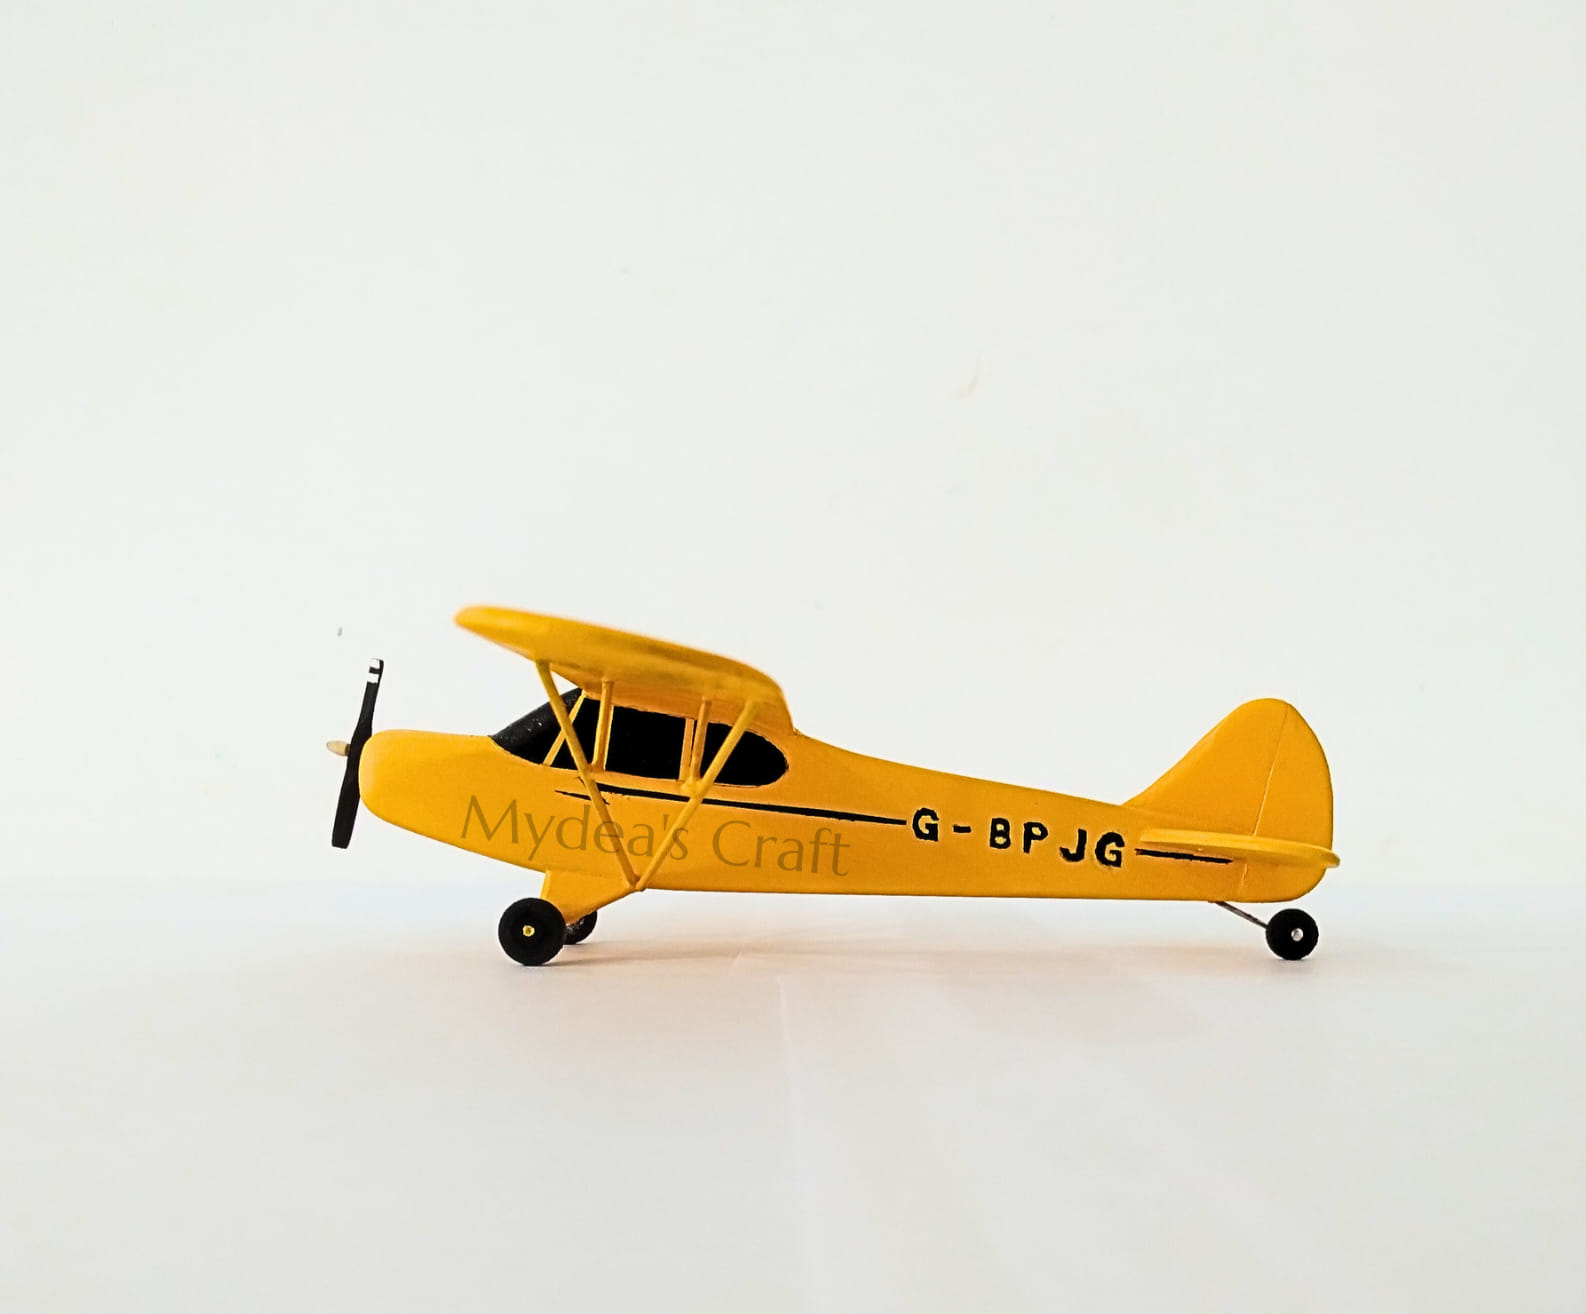 Miniature model aircraft